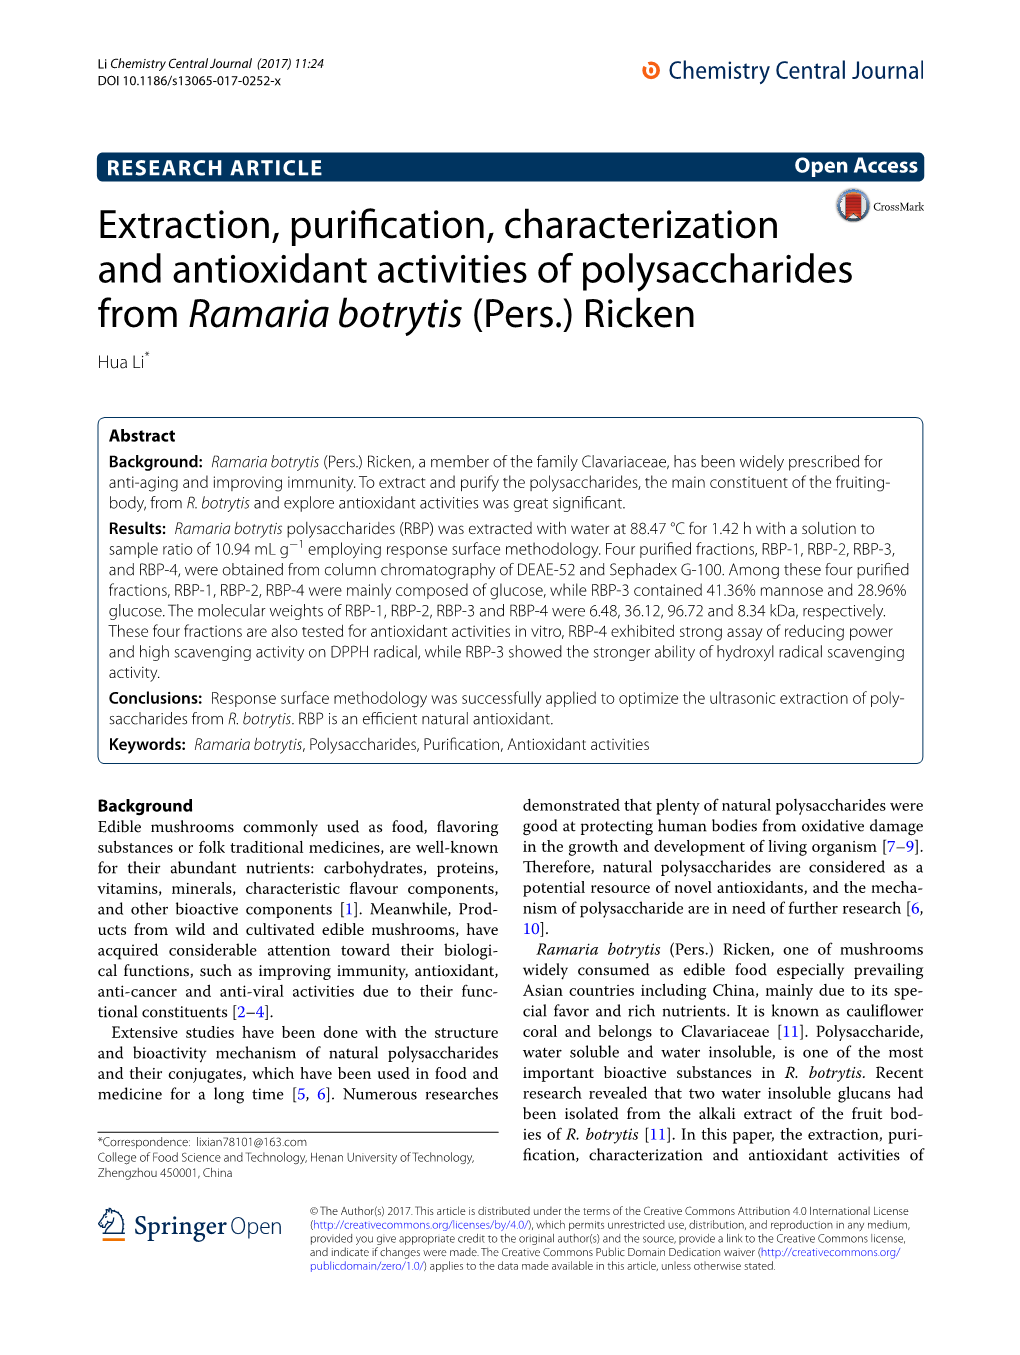 Extraction, Purification, Characterization and Antioxidant Activities of Polysaccharides from Ramaria Botrytis (Pers.) Ricken Hua Li*